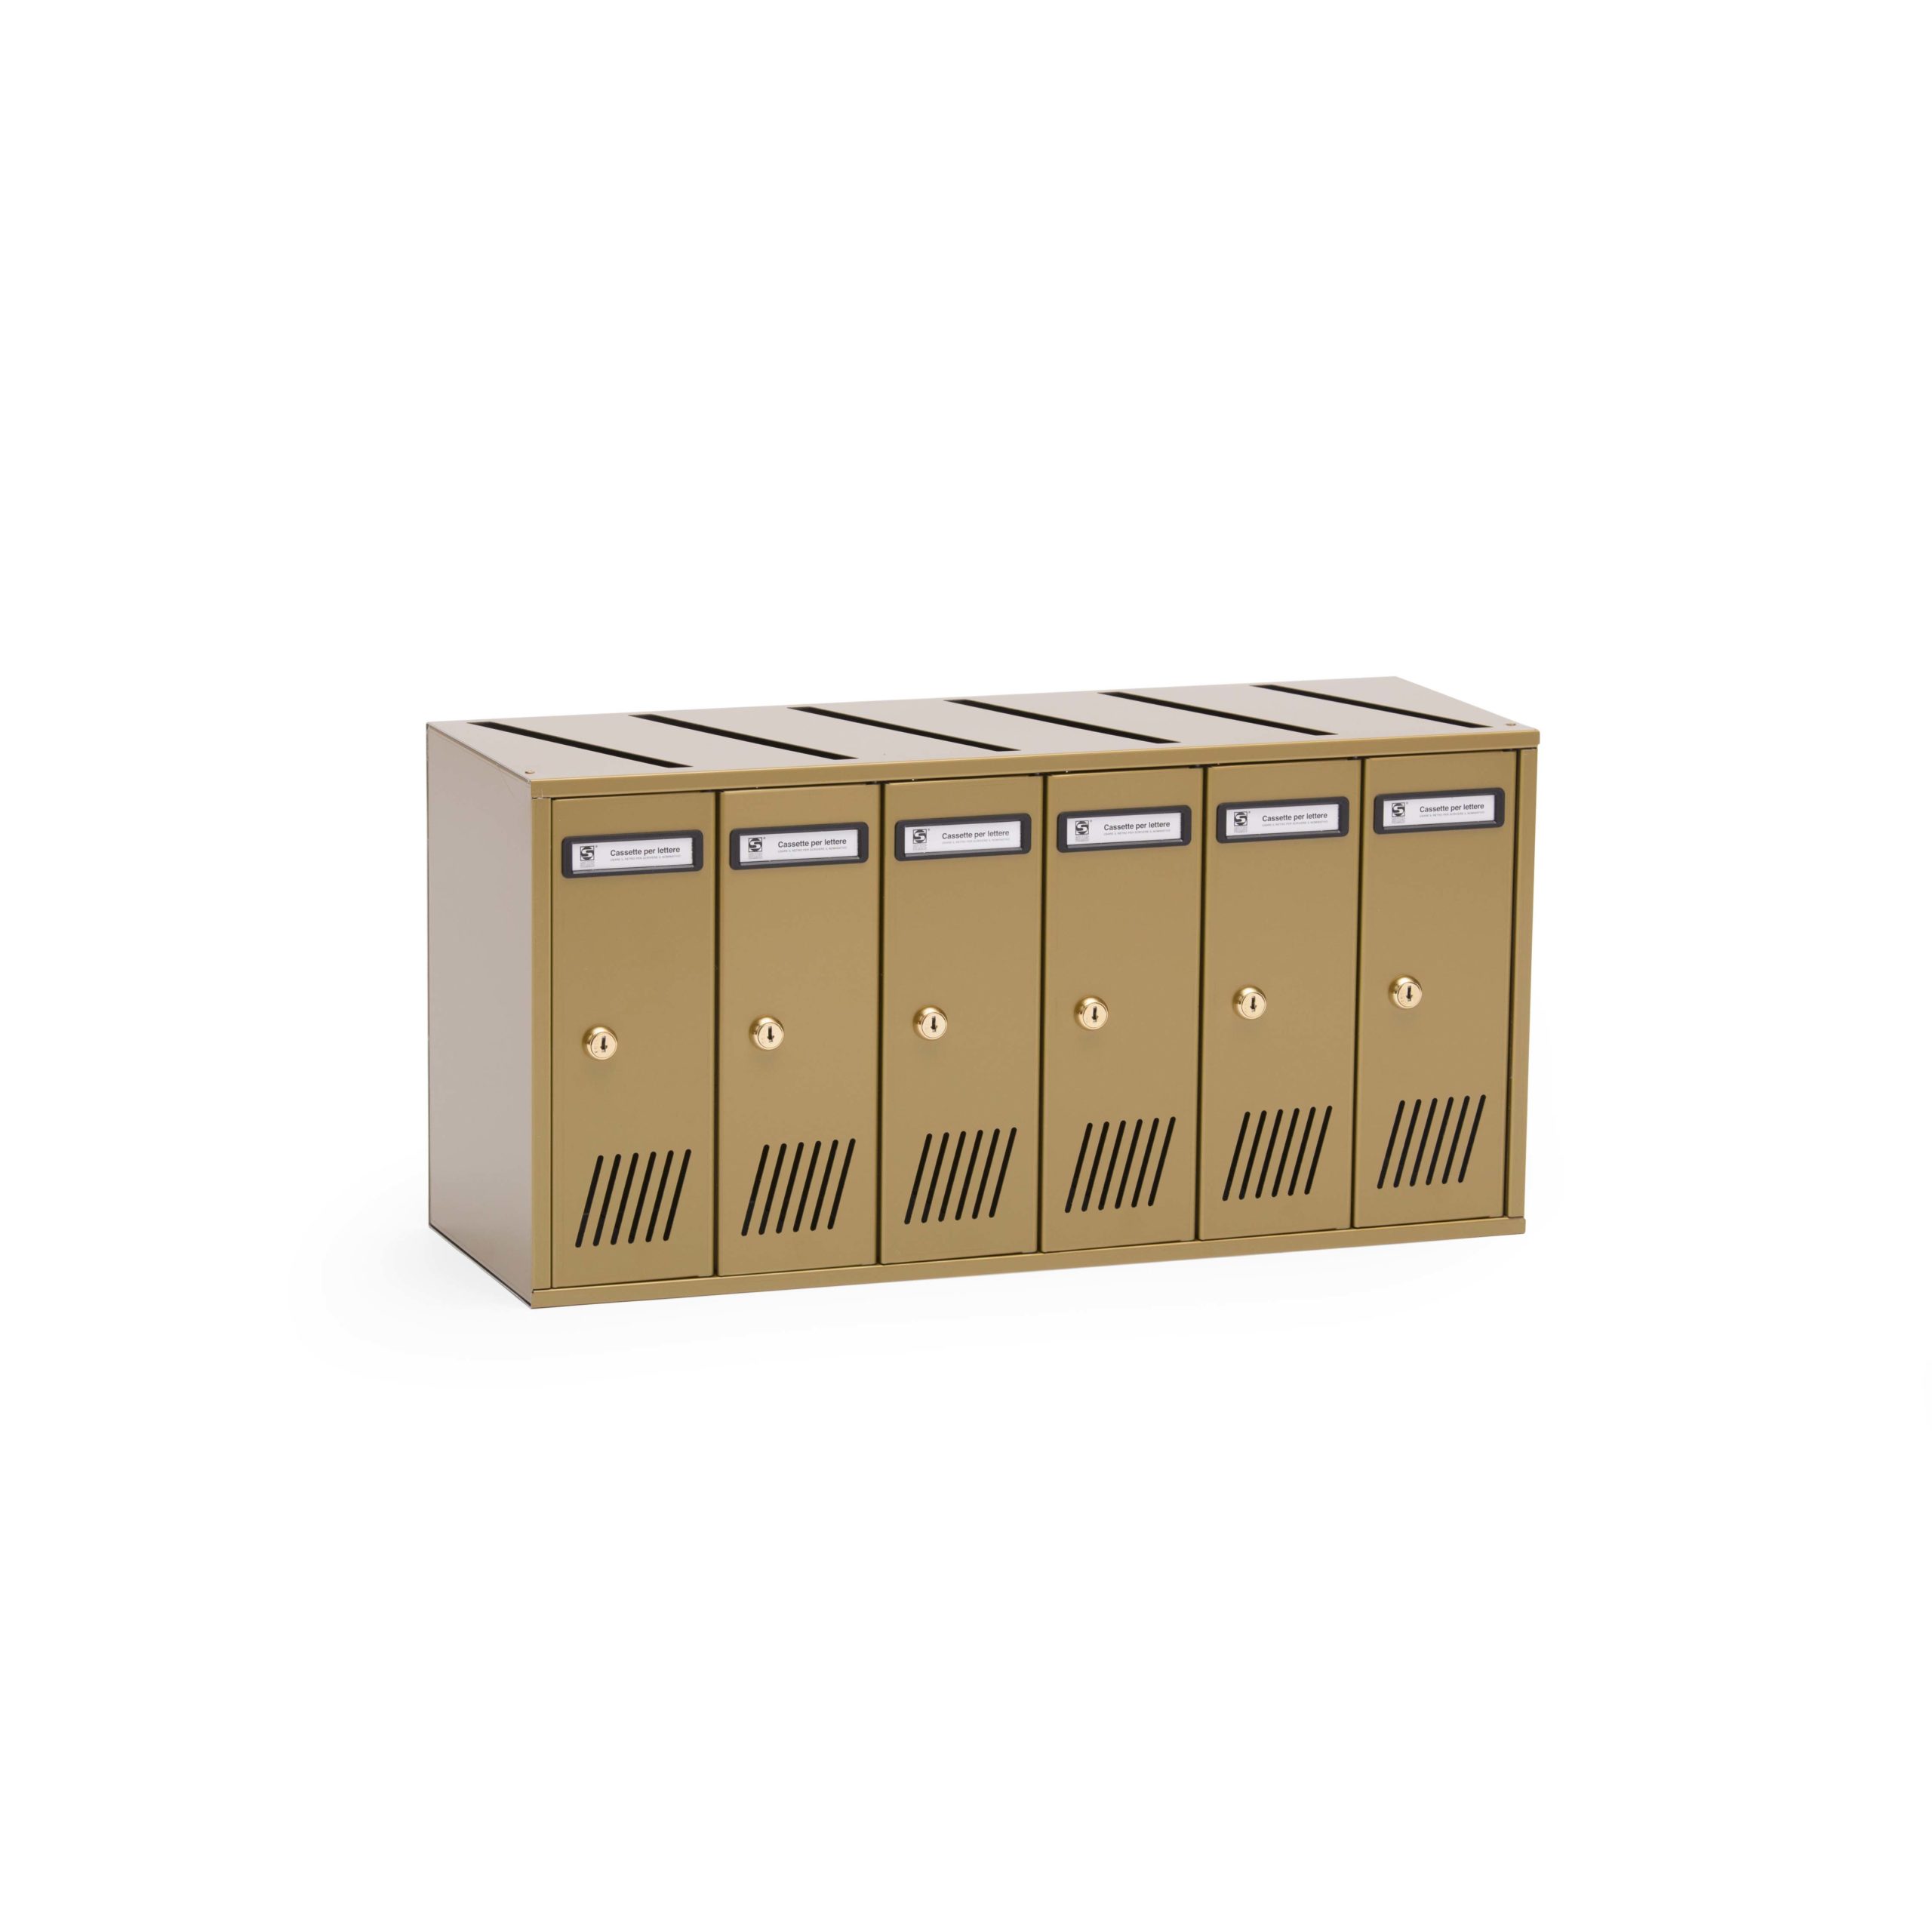 Standard modular letterbox units SC7V – 6 letterboxes